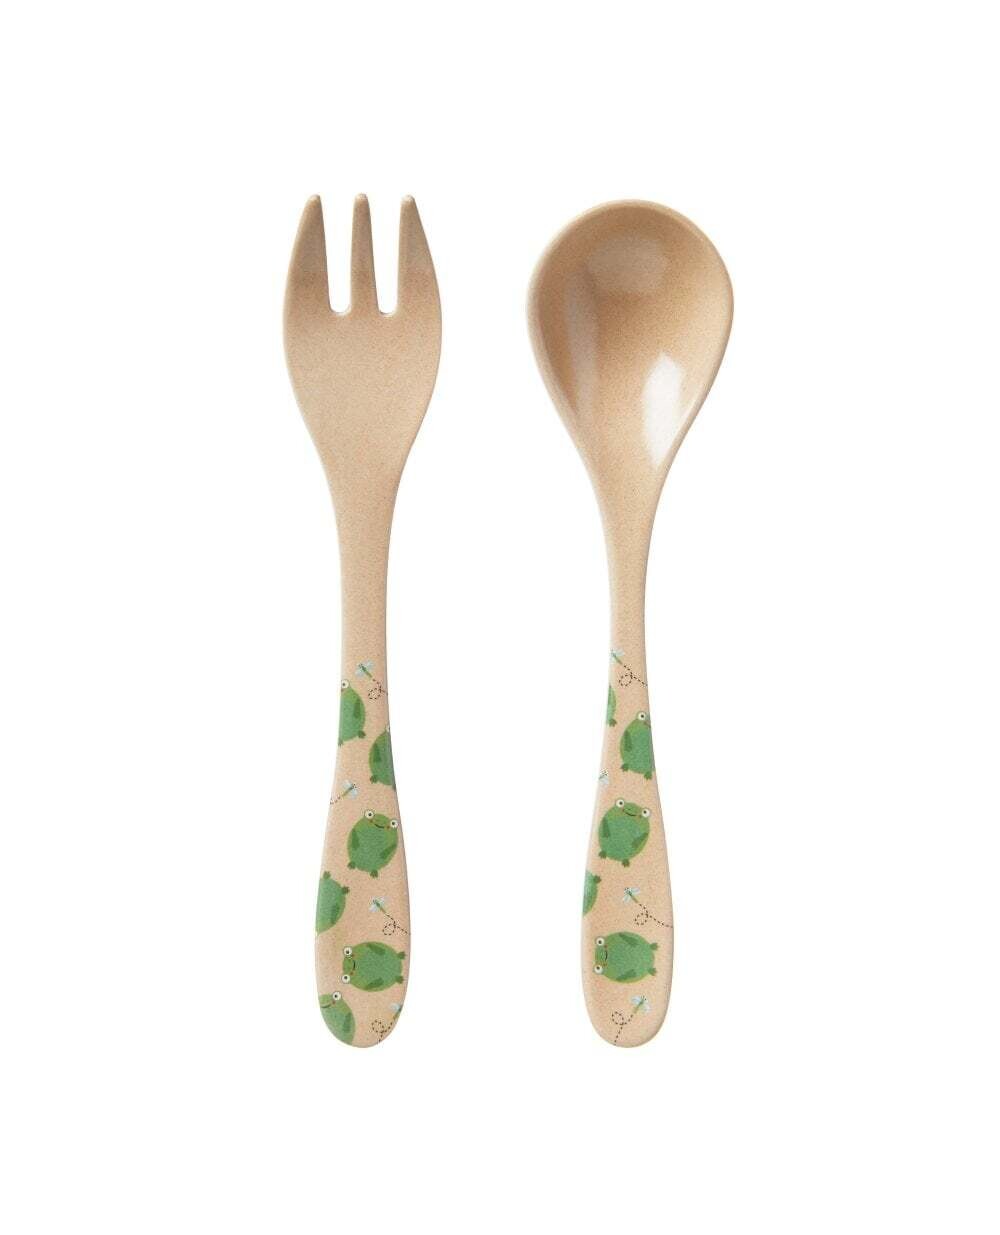 Rice Husk Eco Fork & Spoon Set